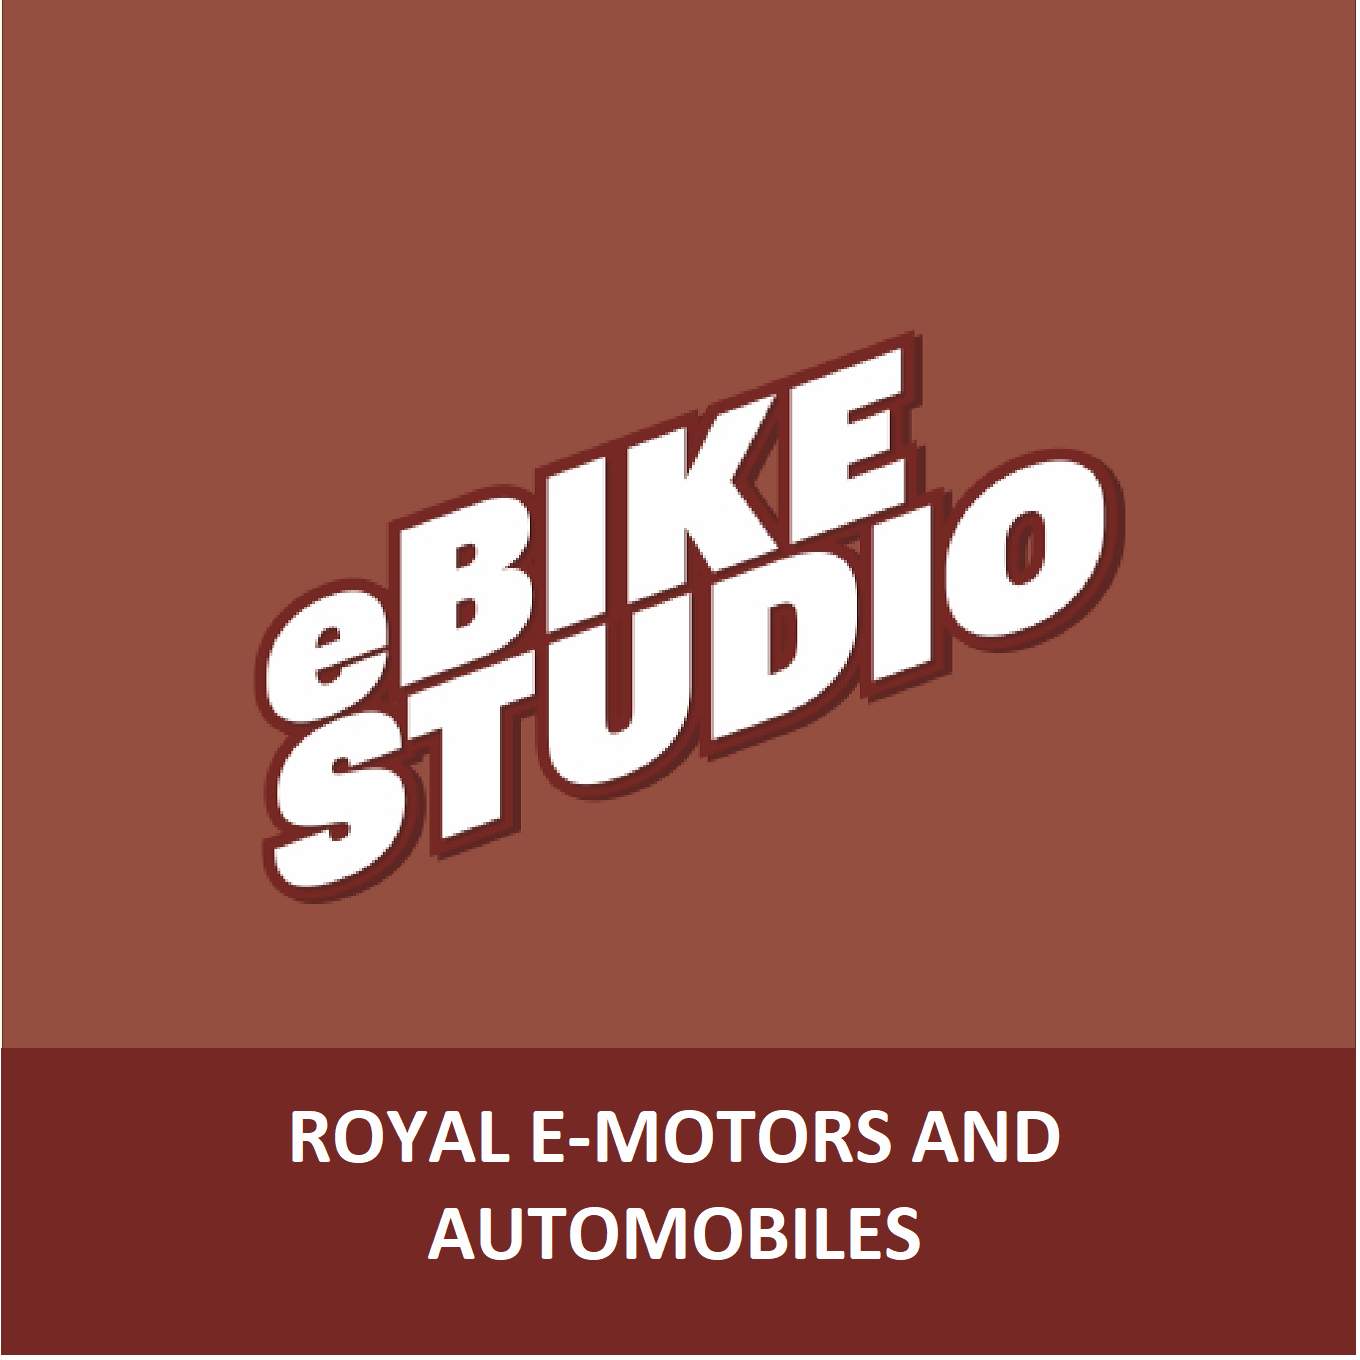 Royal E-Motors and Automobiles